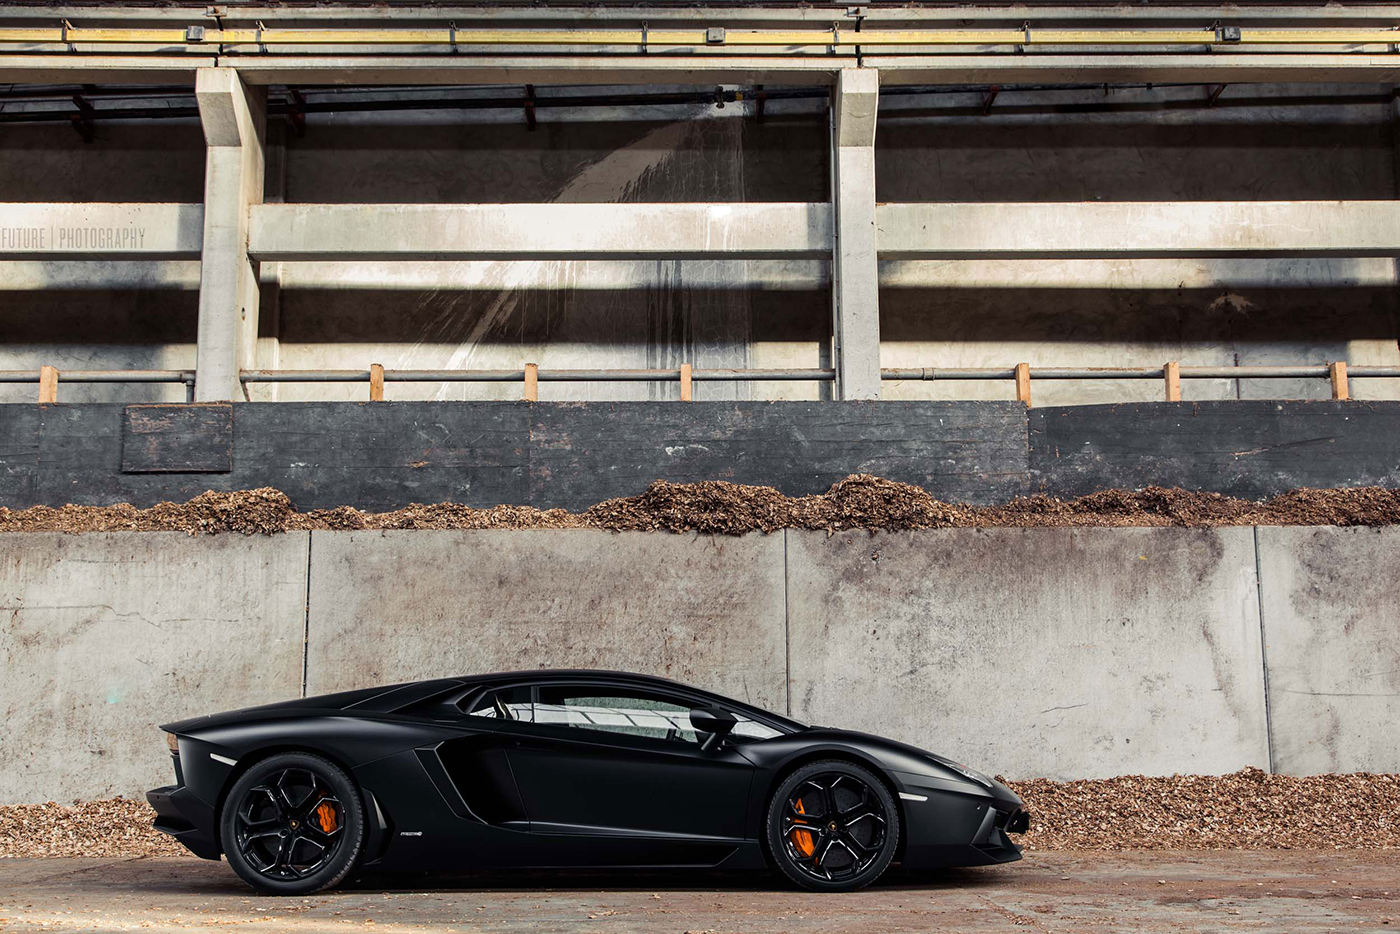 Dit is de Lamborghini Aventador LP700-4 van Futurephotography 